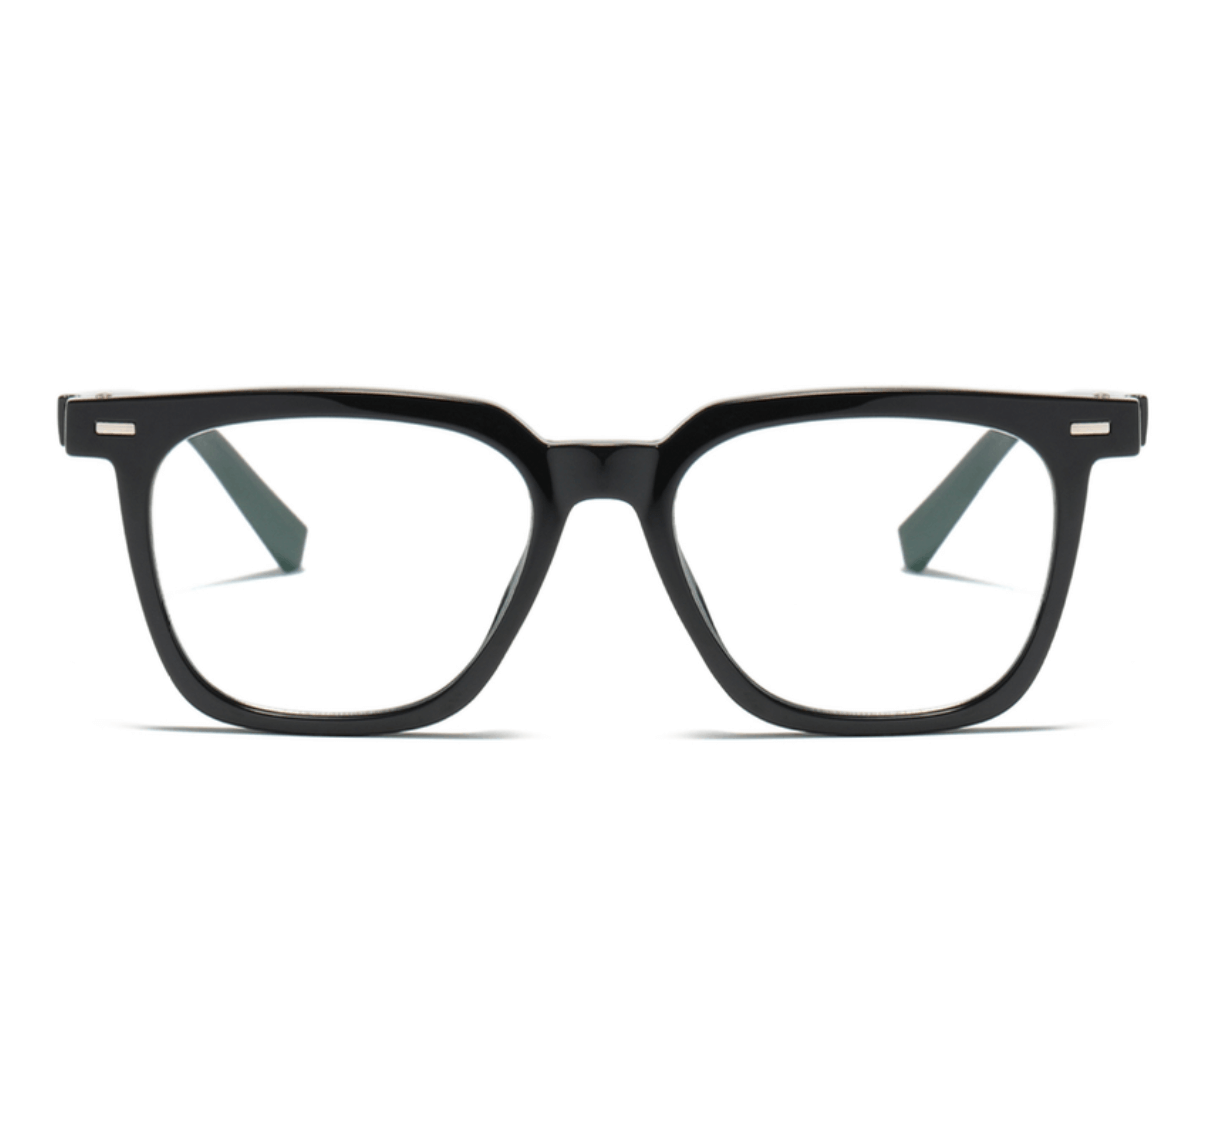 Mens Glasses Frames, Custom Frames Glasses, glasses frame manufacturers in China, Optical frames supplier